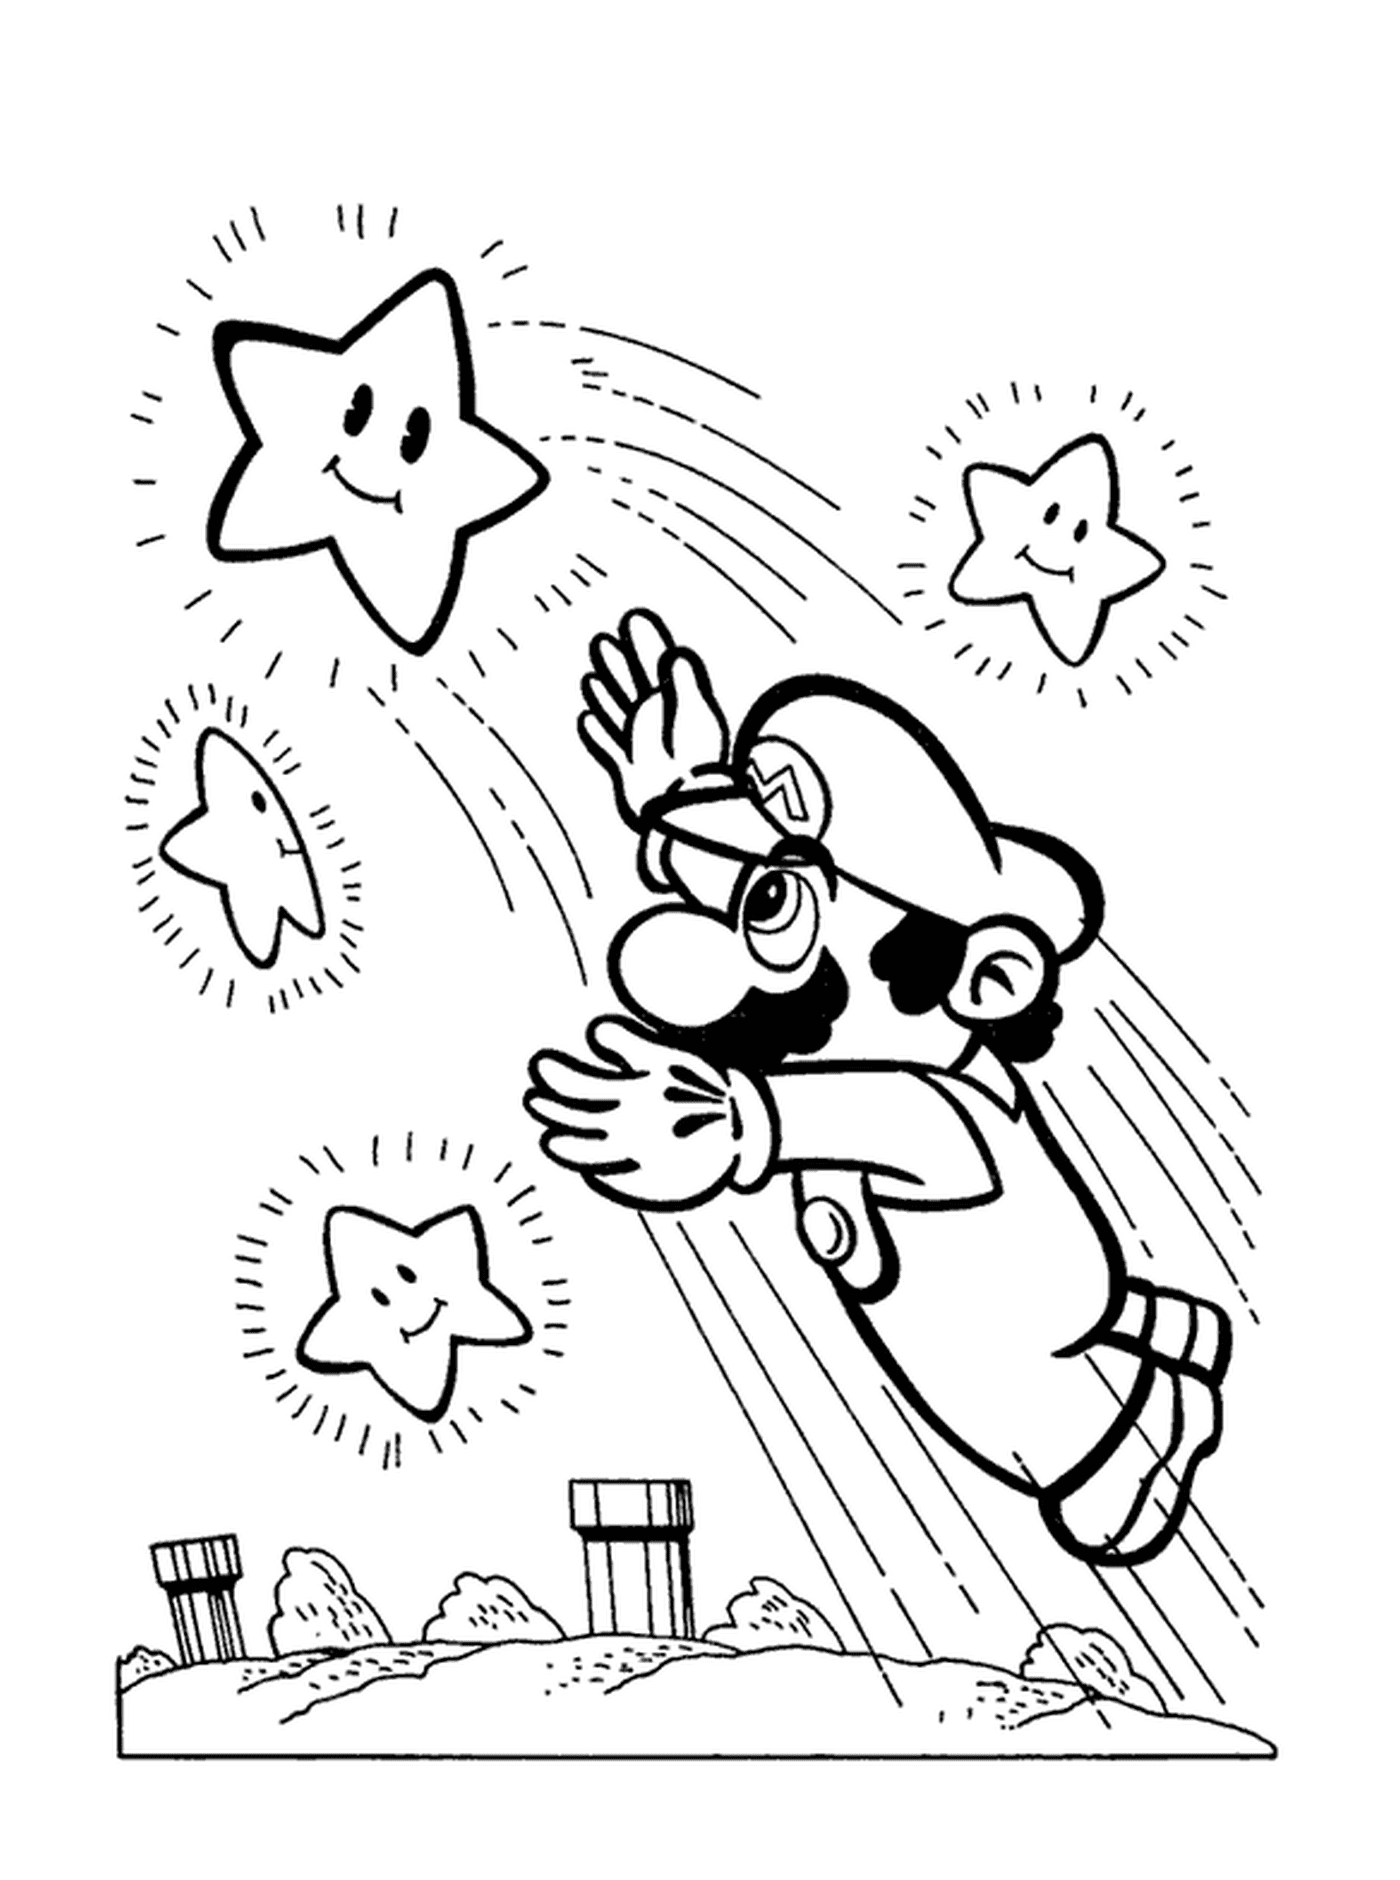  Mario afferra una stella luminosa 